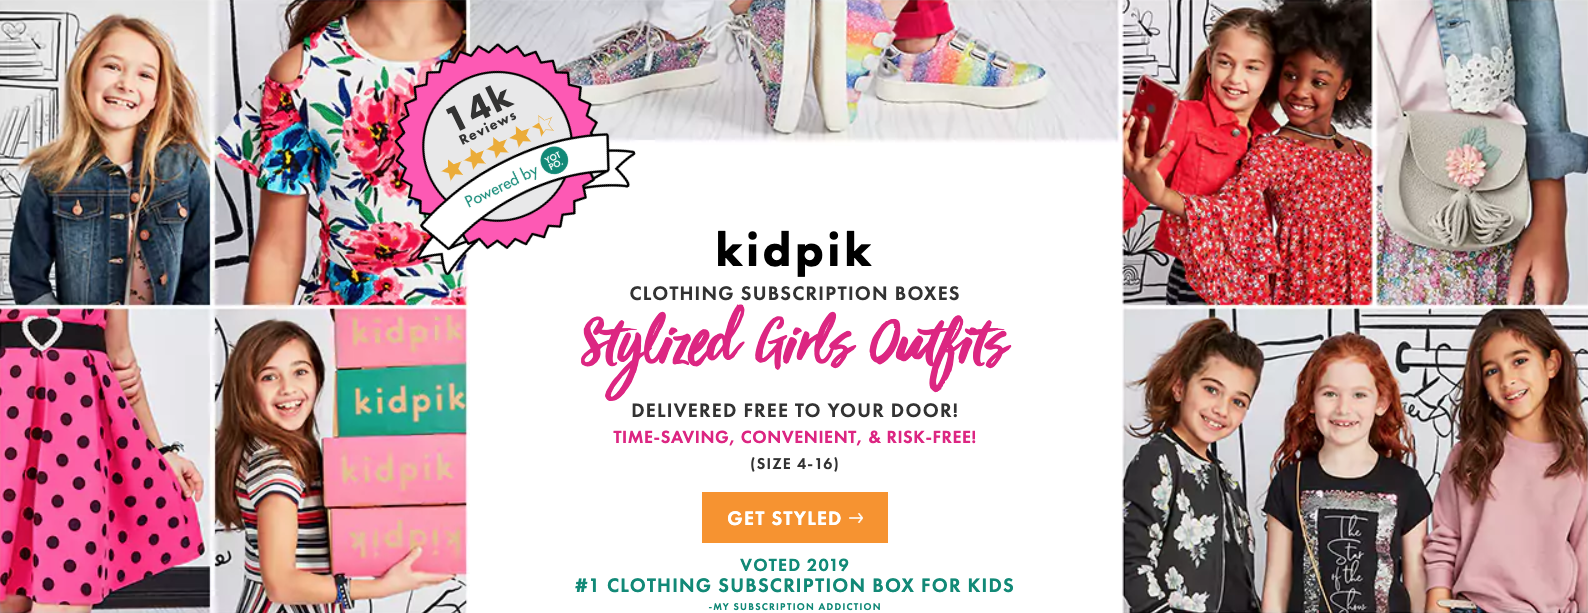 kidpik clothing subscription boxes for girls!